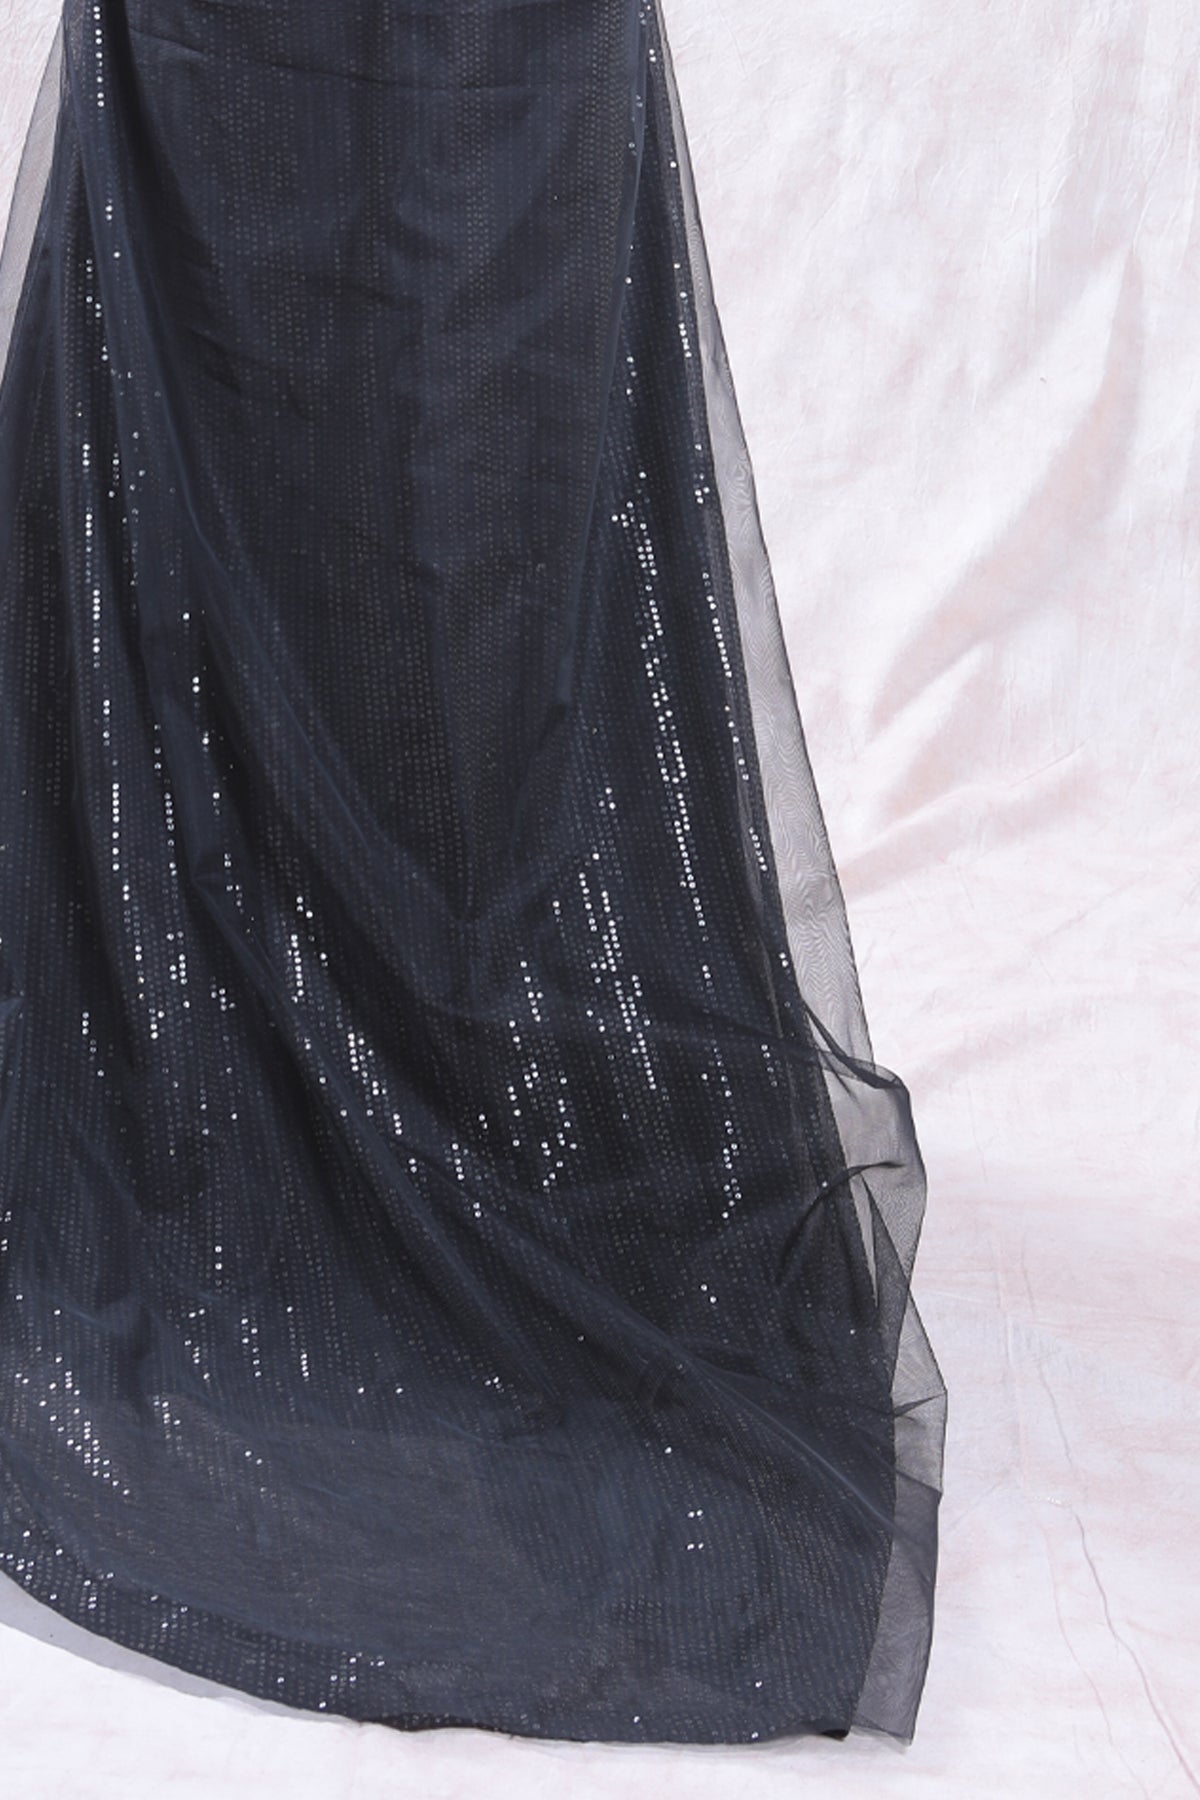 Mermaid Sequenced Black Gown